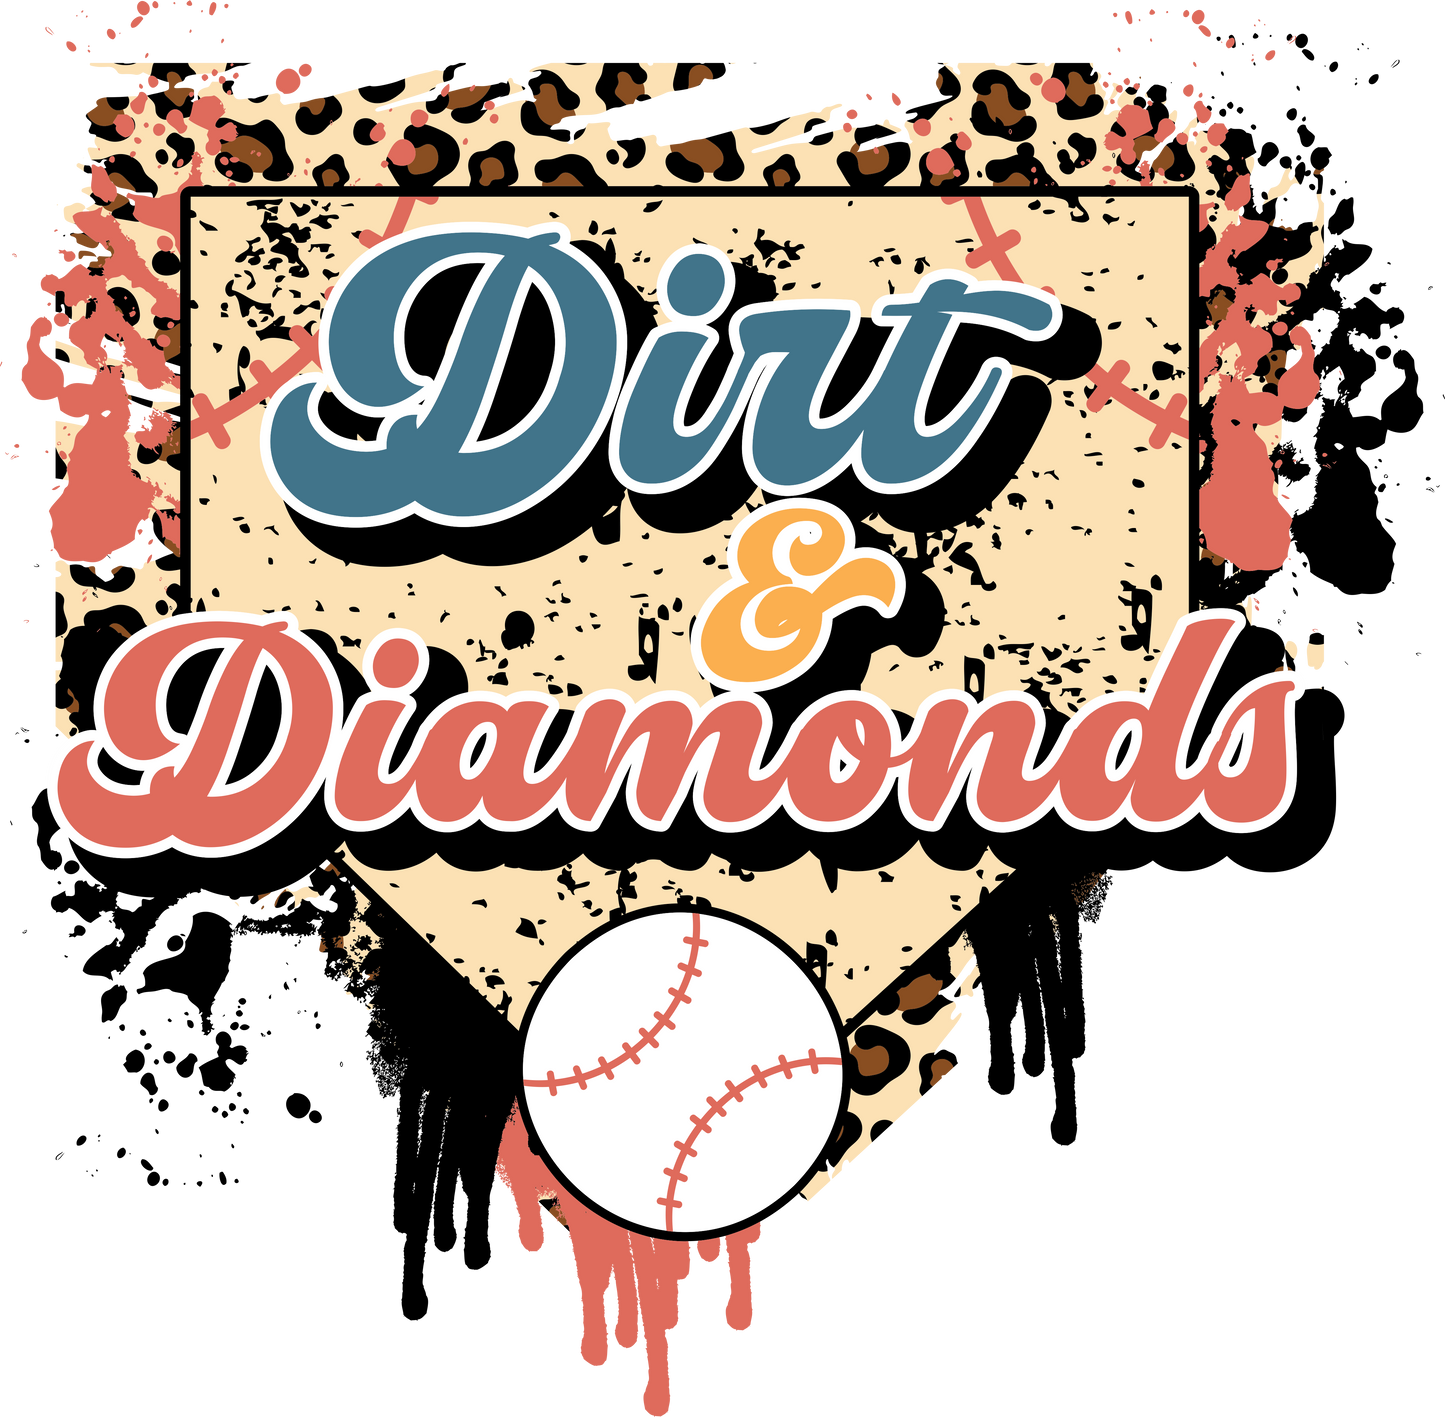 Dirt and Diamonds